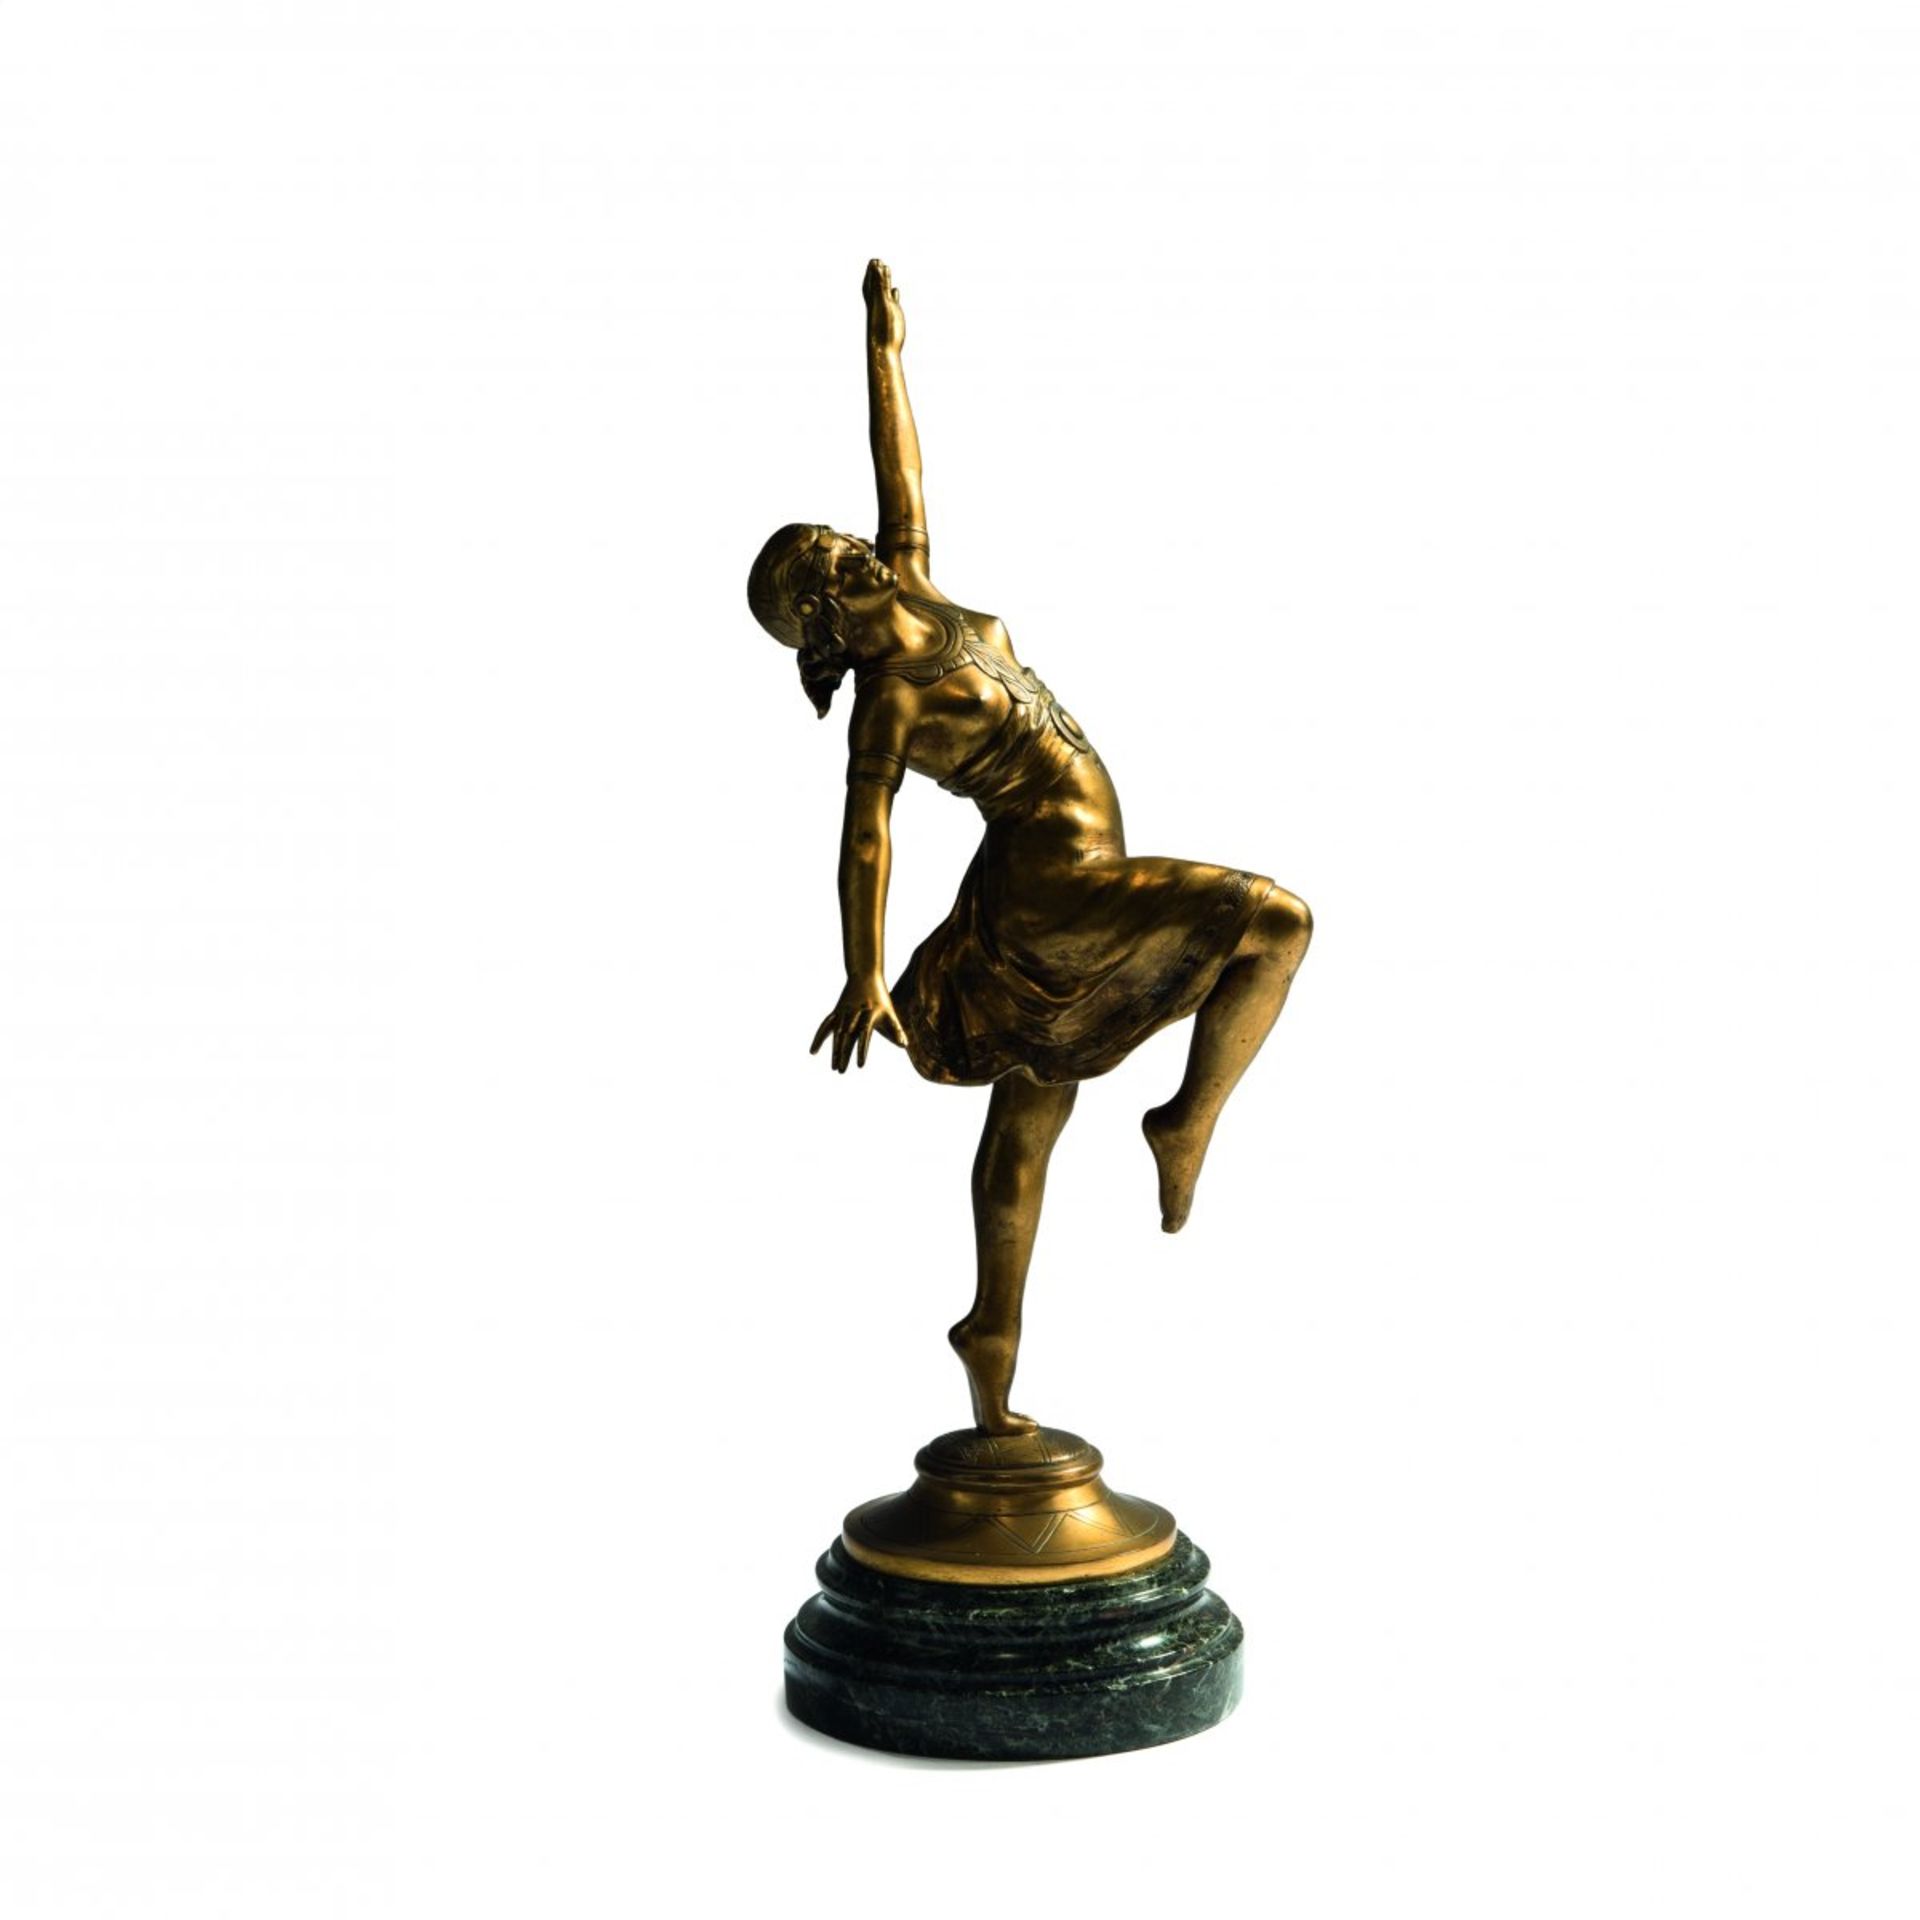 J. Garnier-Villain, Dancer, 1920sDancer, 1920sH. 37.3 cm (with base). Cold-painted bronze. Plinth